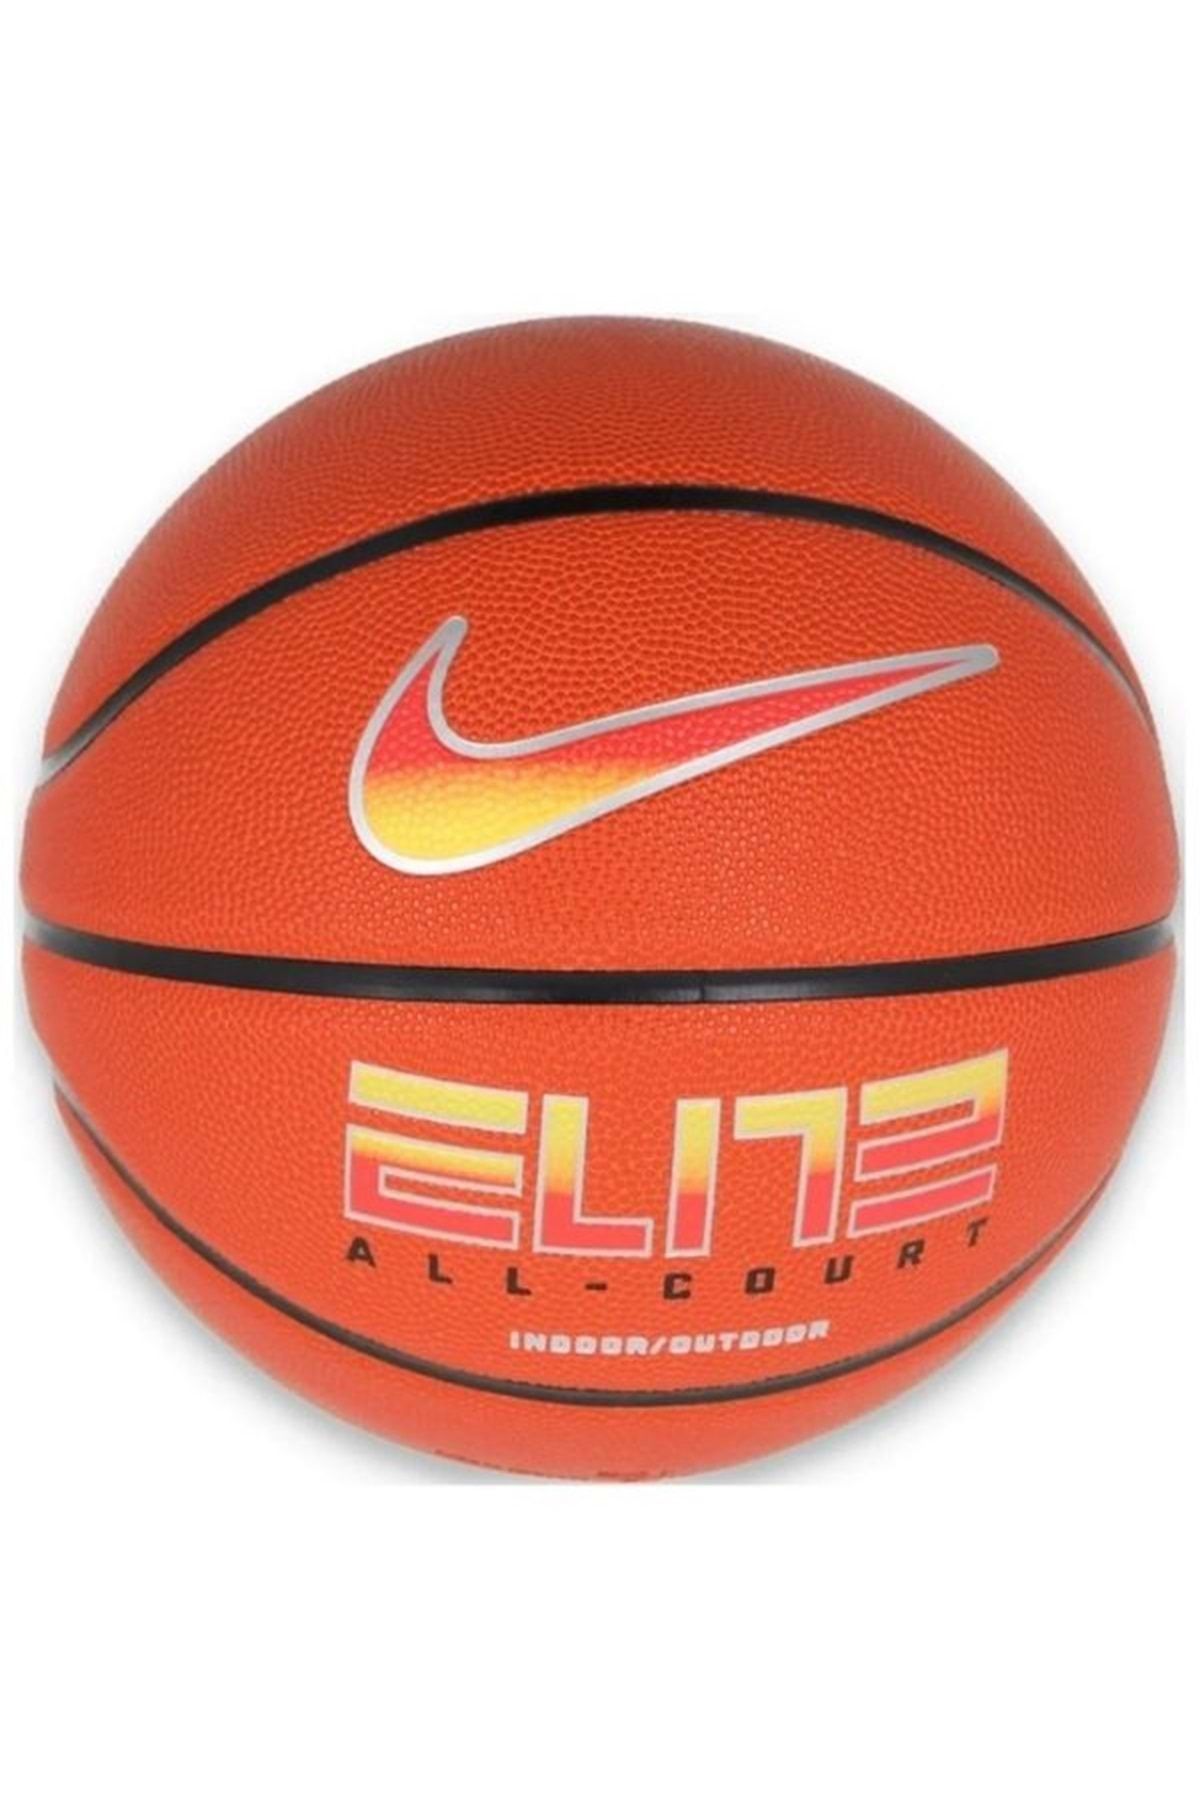 Nike Elite All-court 8p Unisex Basketbol Topu Turuncu